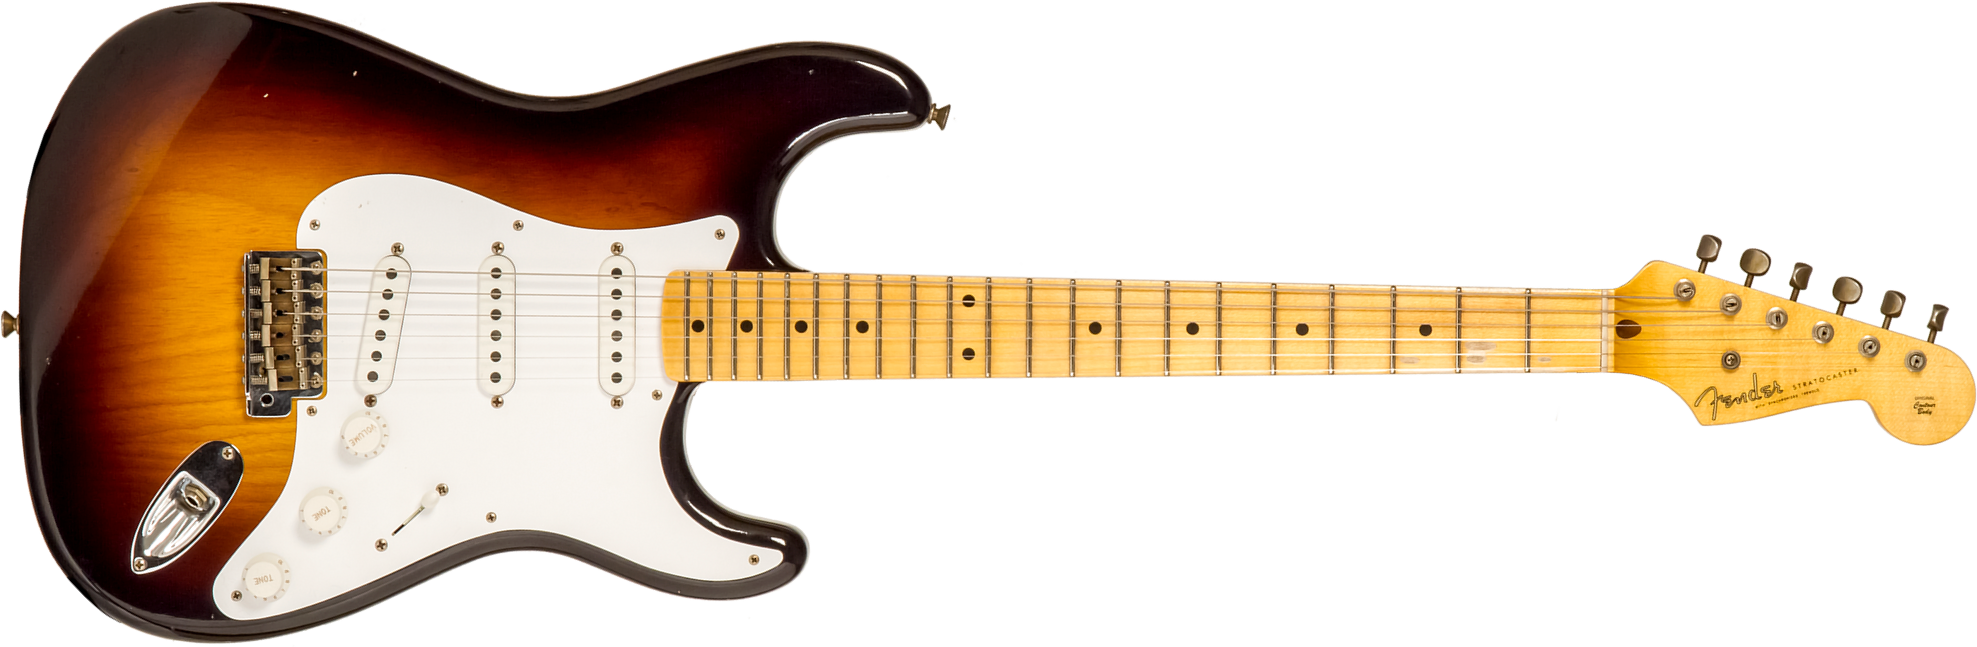 Fender Custom Shop Strat 1954 70th Anniv. 3s Trem Mn #xn4193 - Journeyman Relic Wide-fade 2-color Sunburst - E-Gitarre in Str-Form - Main picture